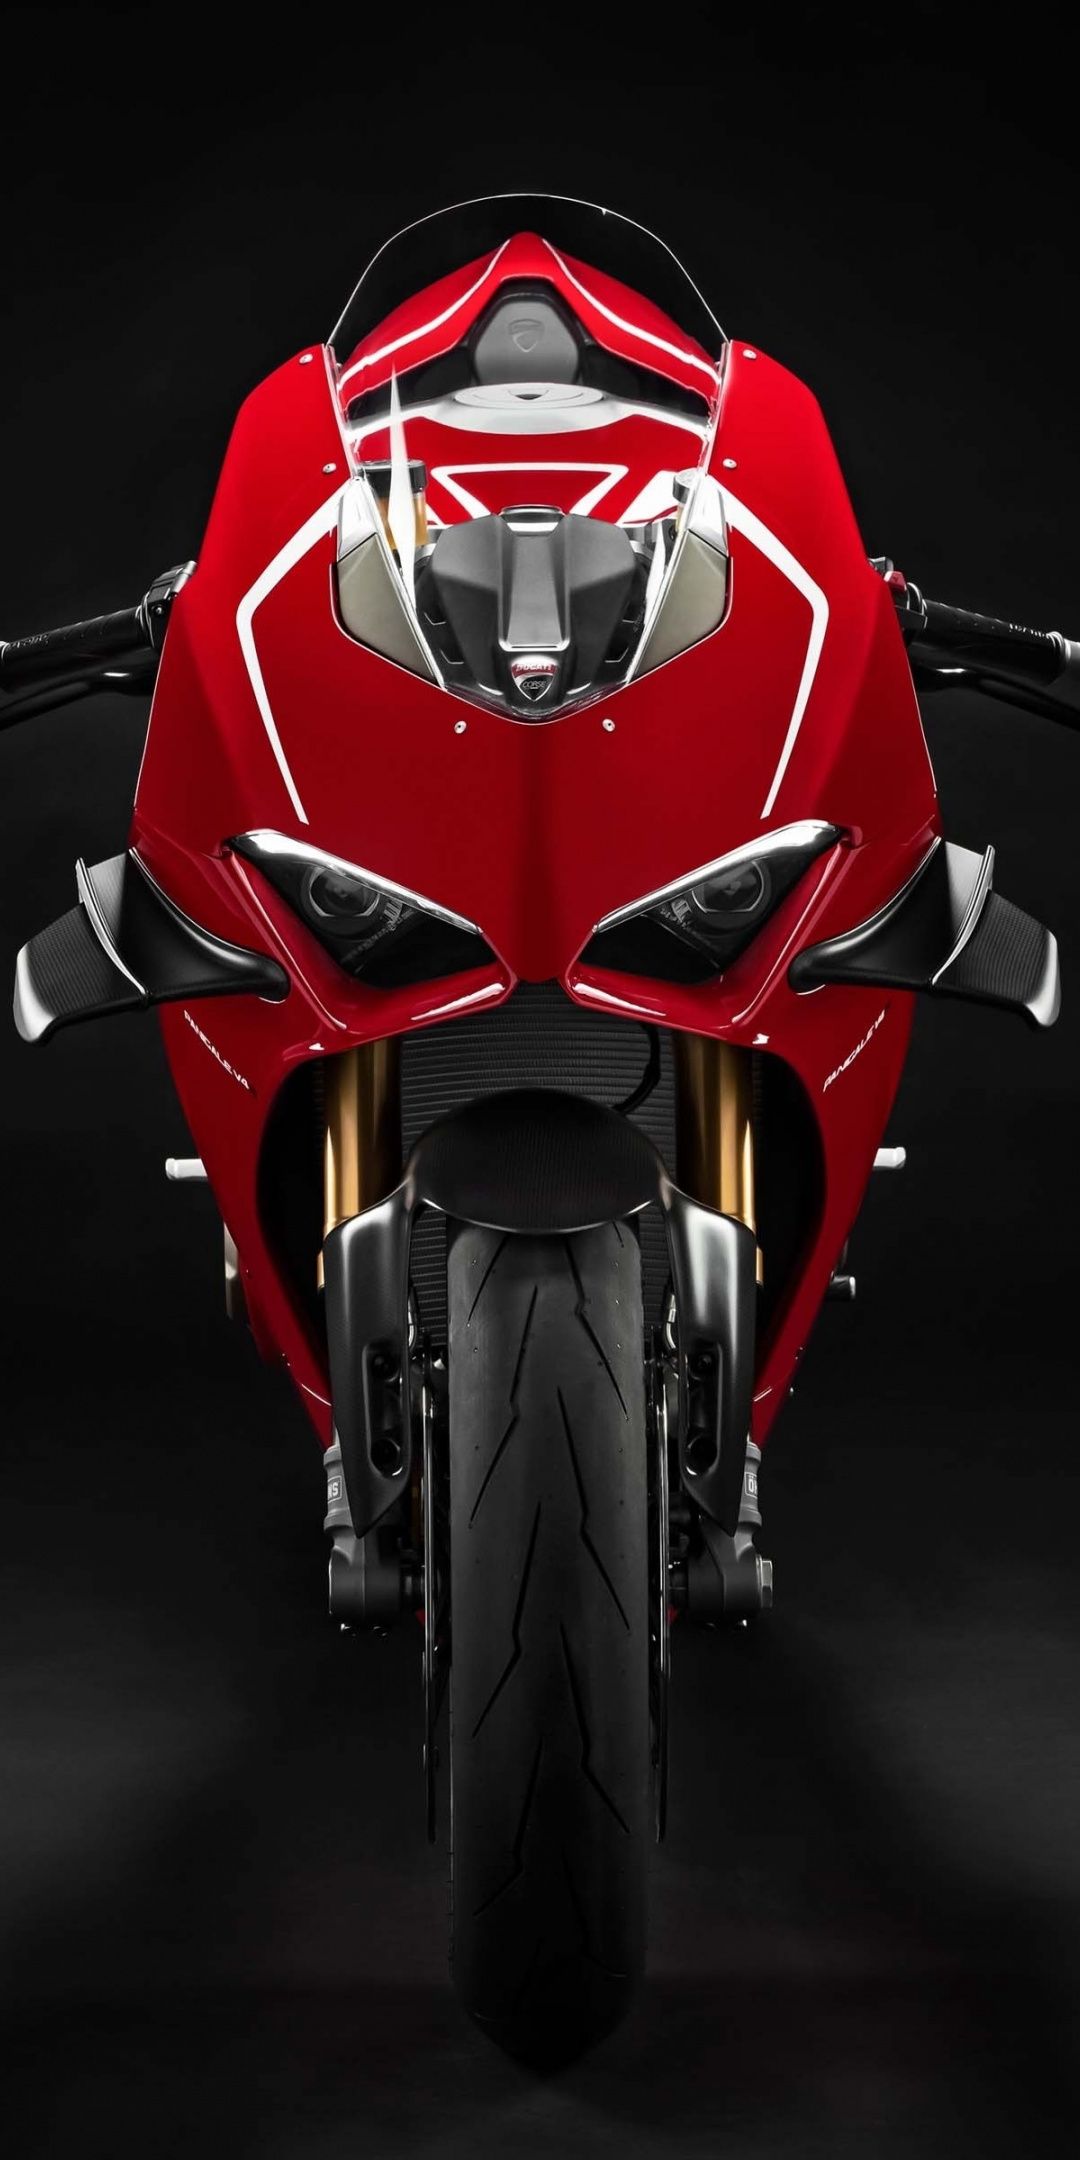 Ducati Panigale V4 R Pure Racing Bike Wallpaper